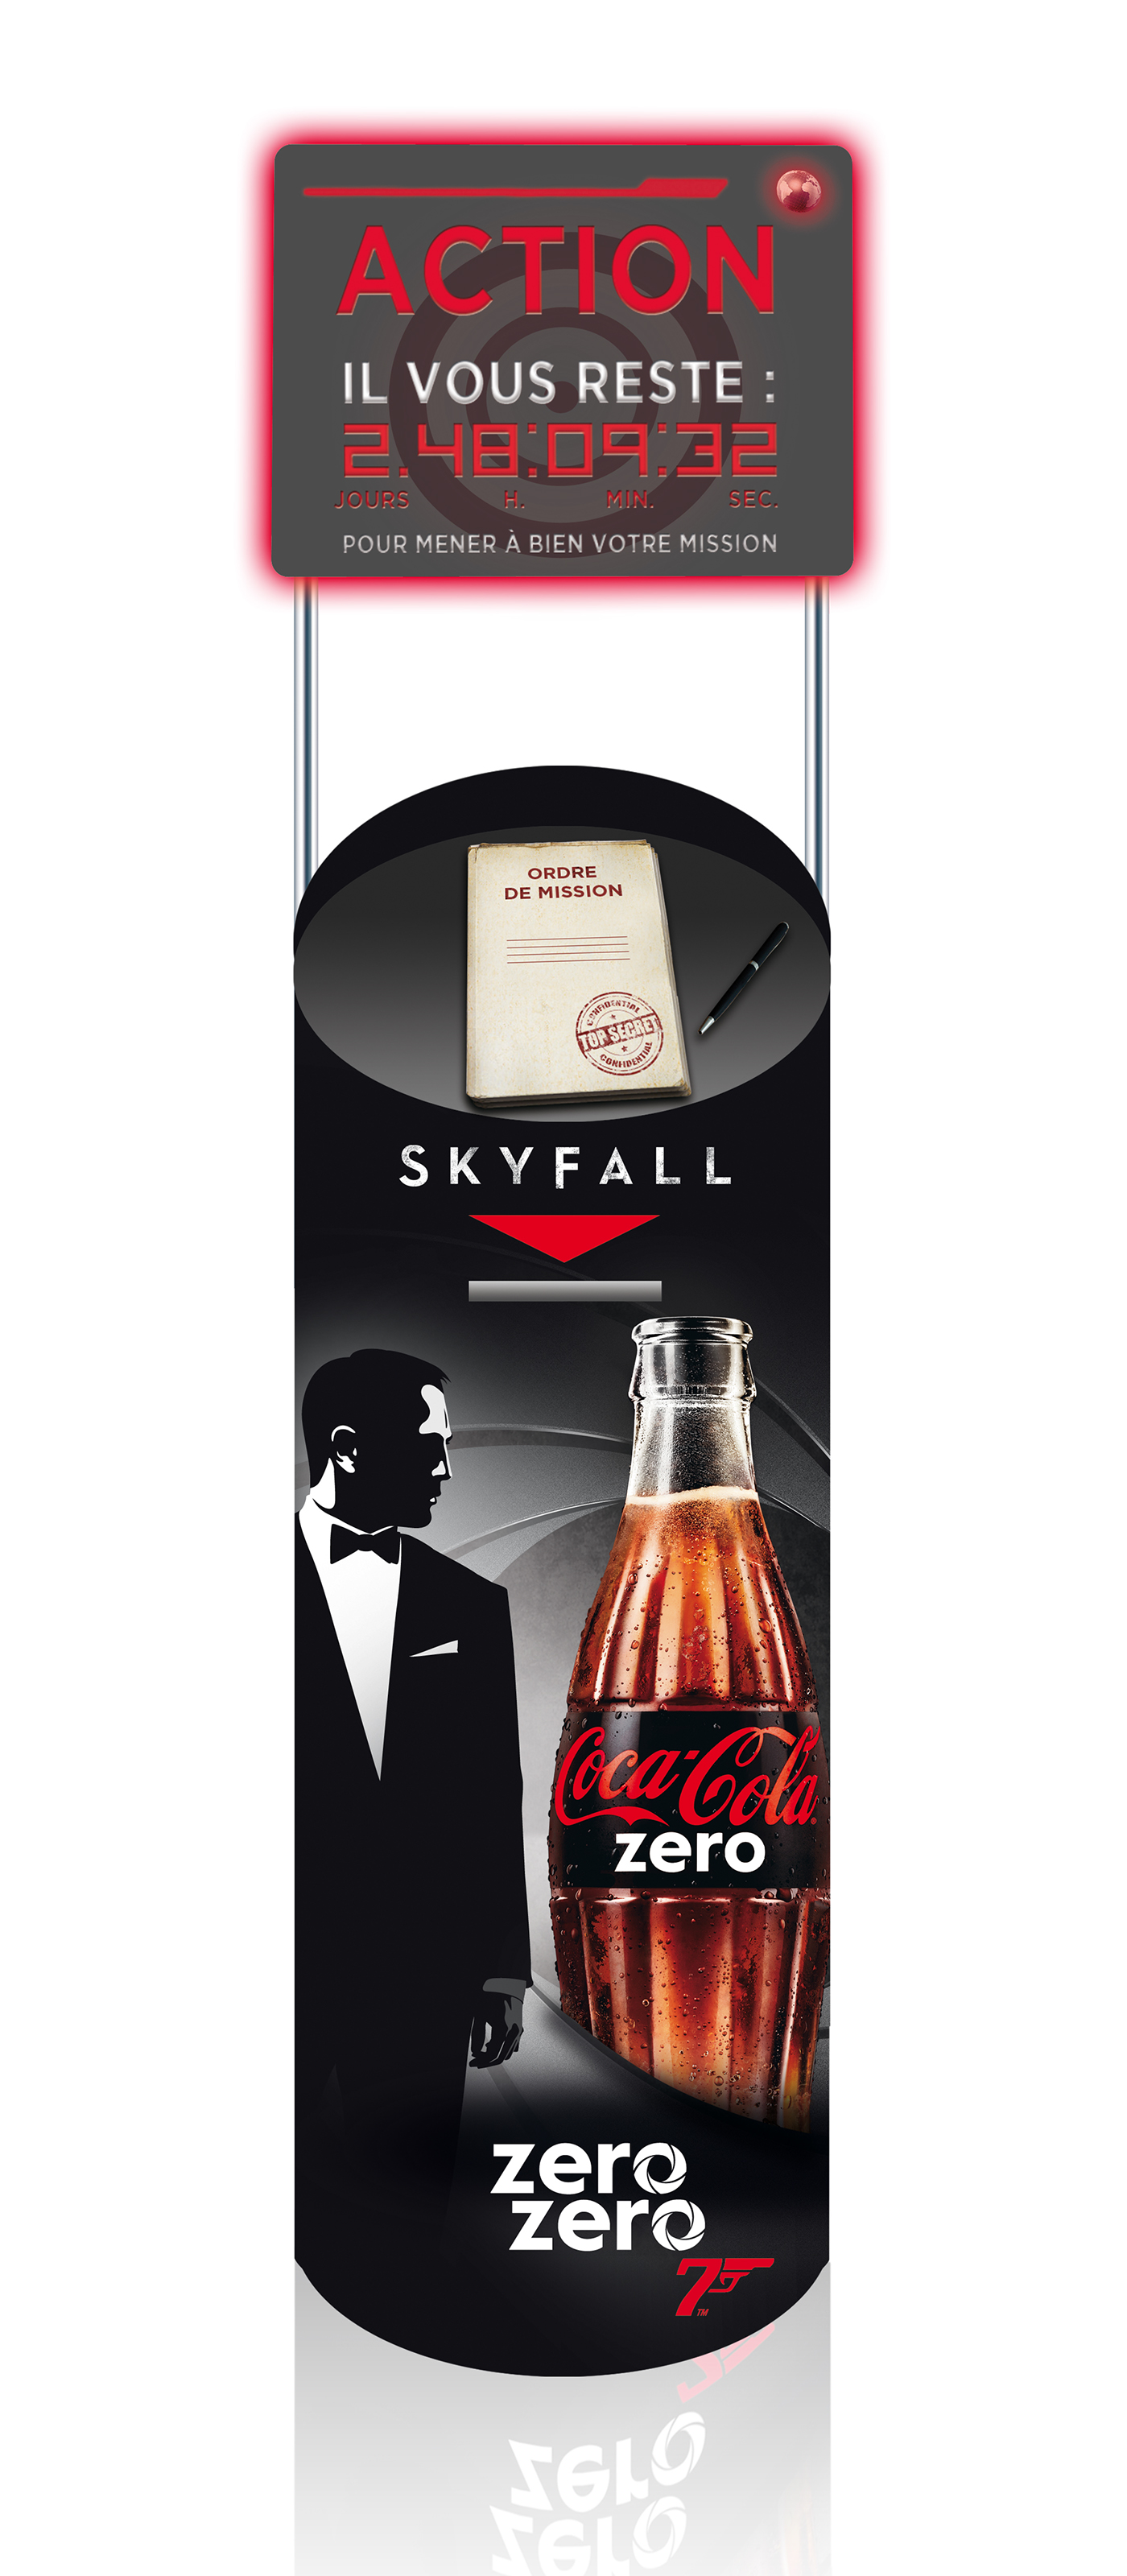 Coca-Cola coca coke james bond skyfall zero zero 7 supermarché hypermarché action munition zero Sony Cyber-shot aston martin stage pilotage mission